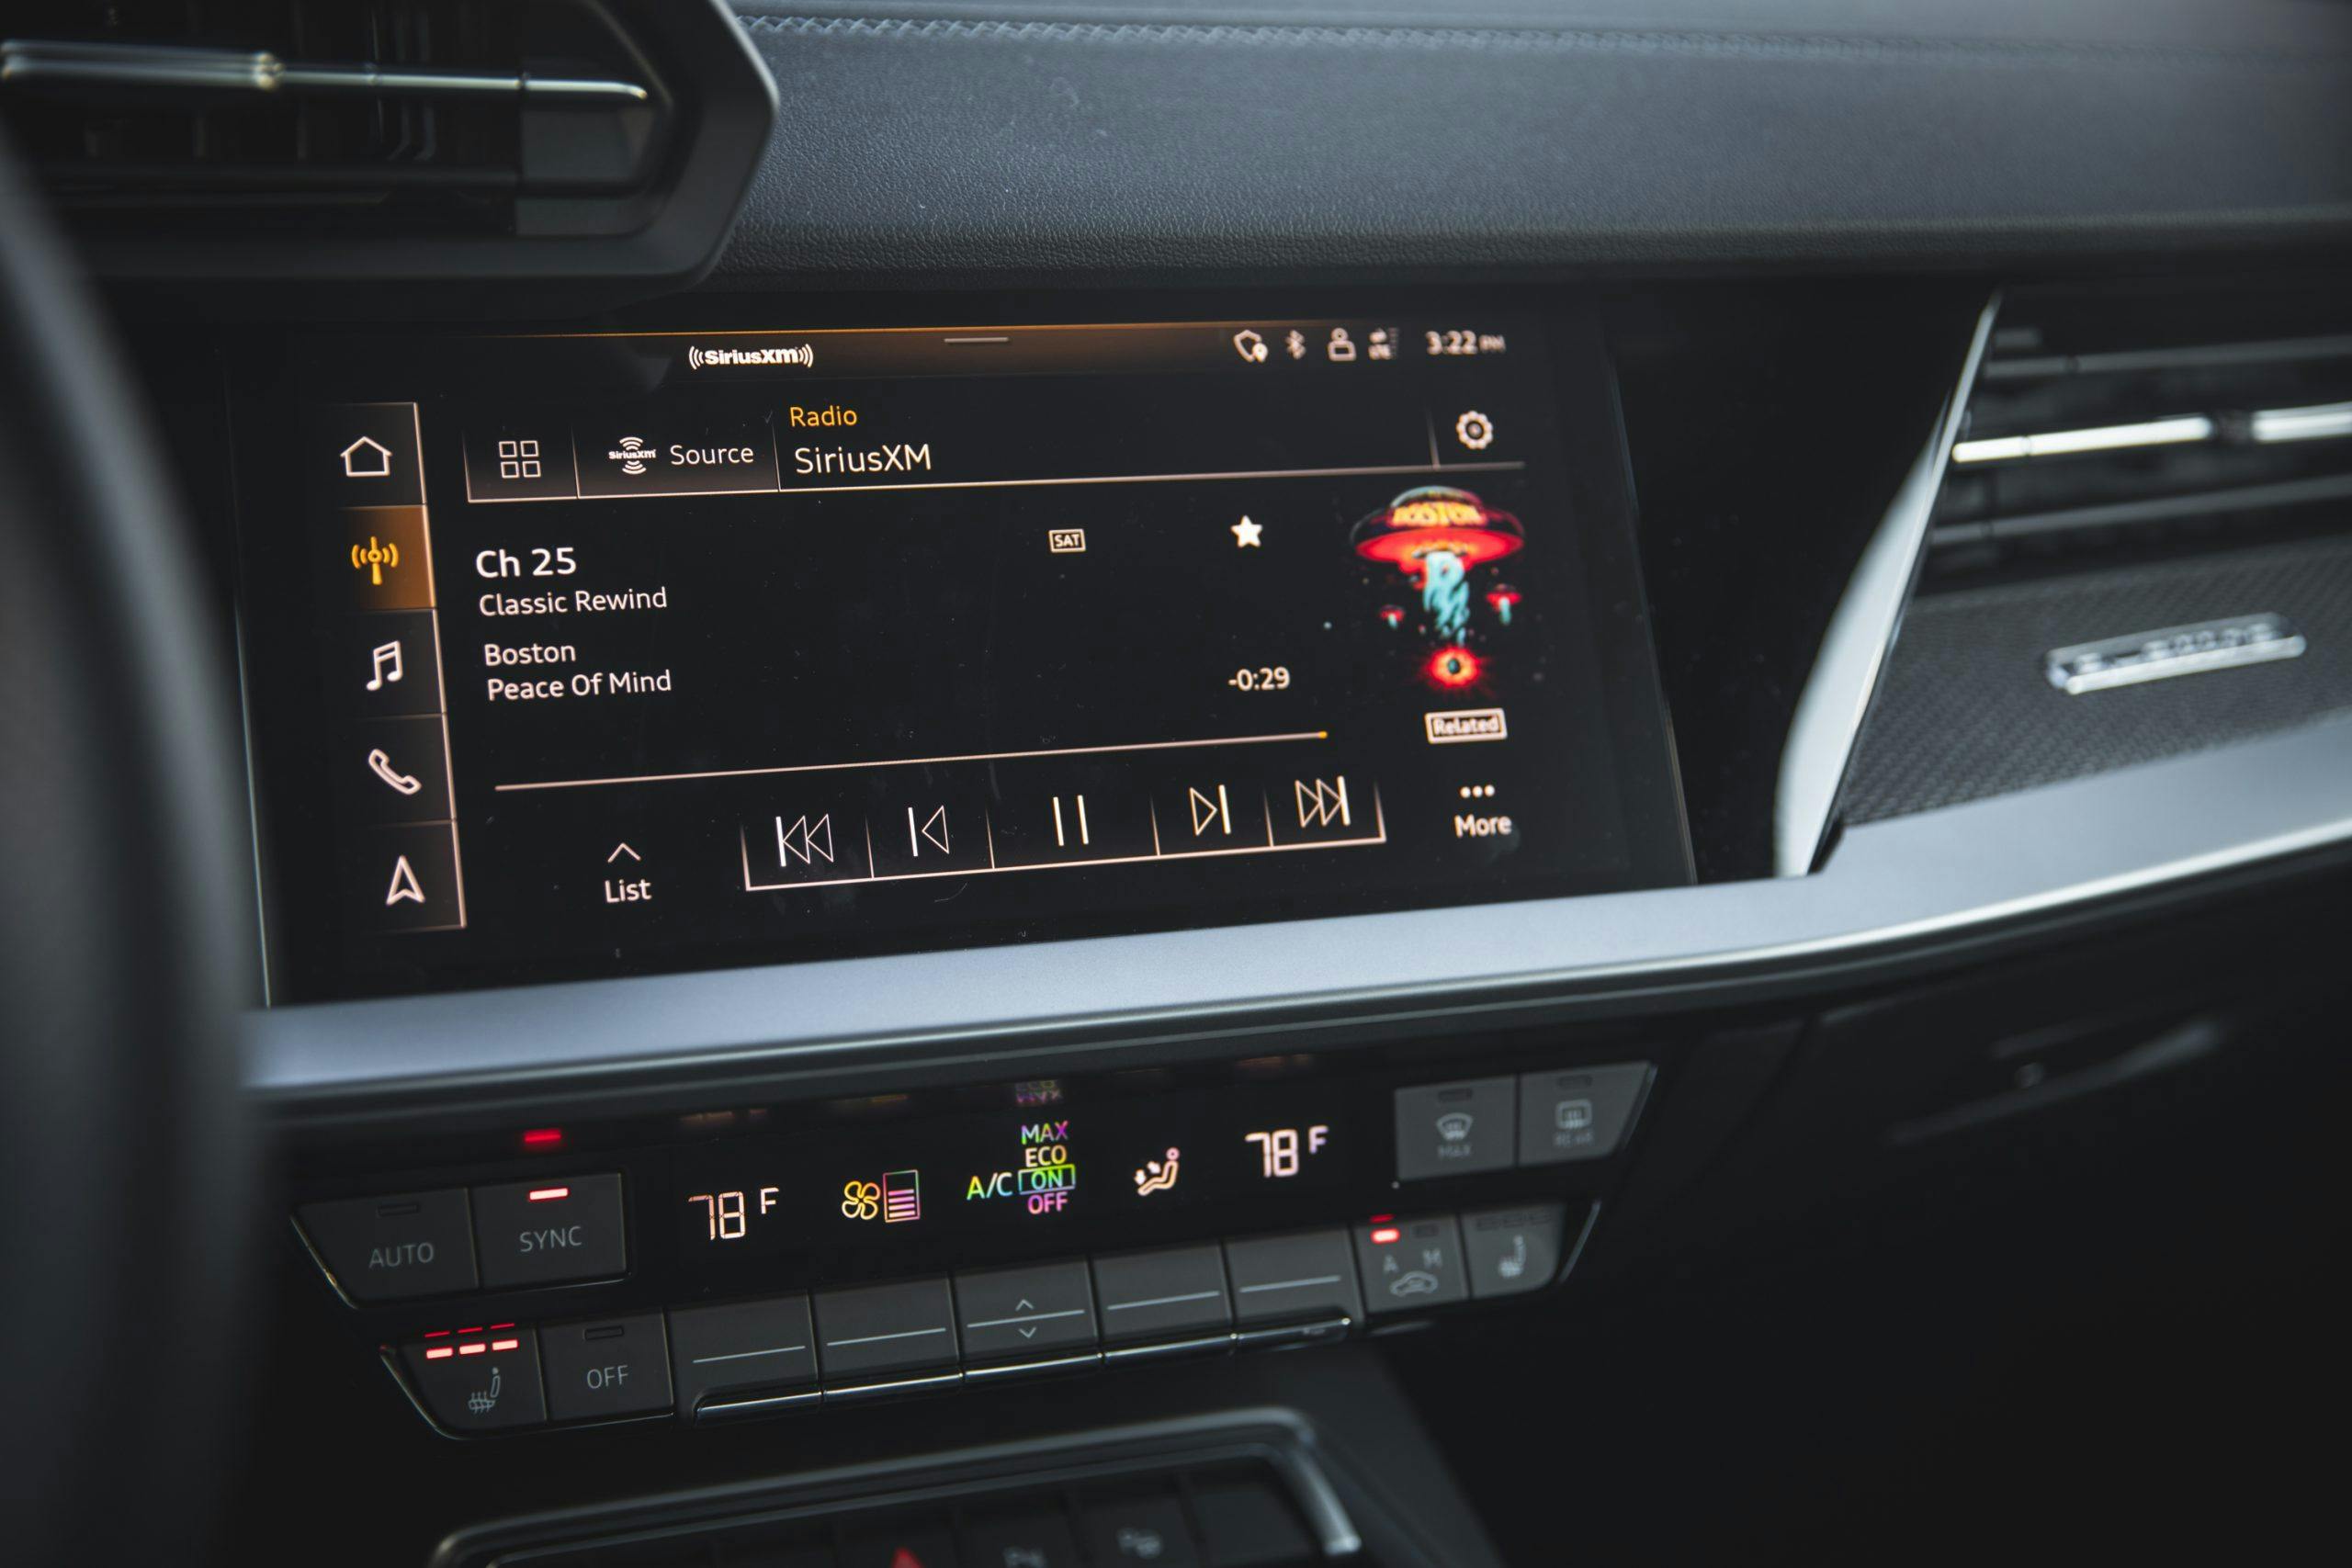 2022 Audi S3 interior infotainment screen detail